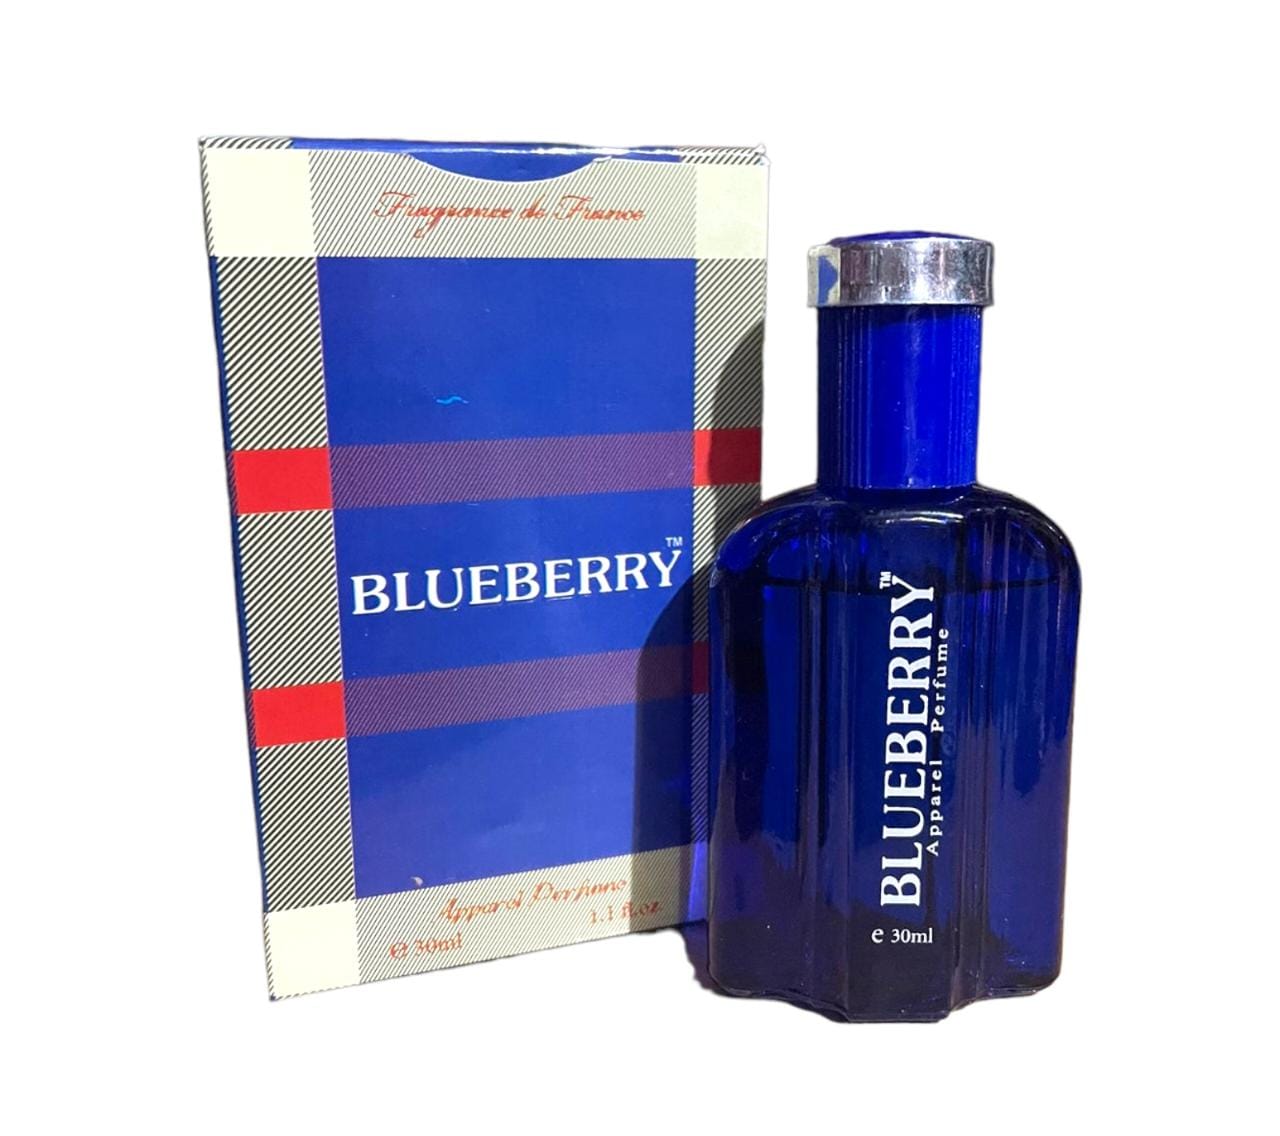 Blueberry purfume 